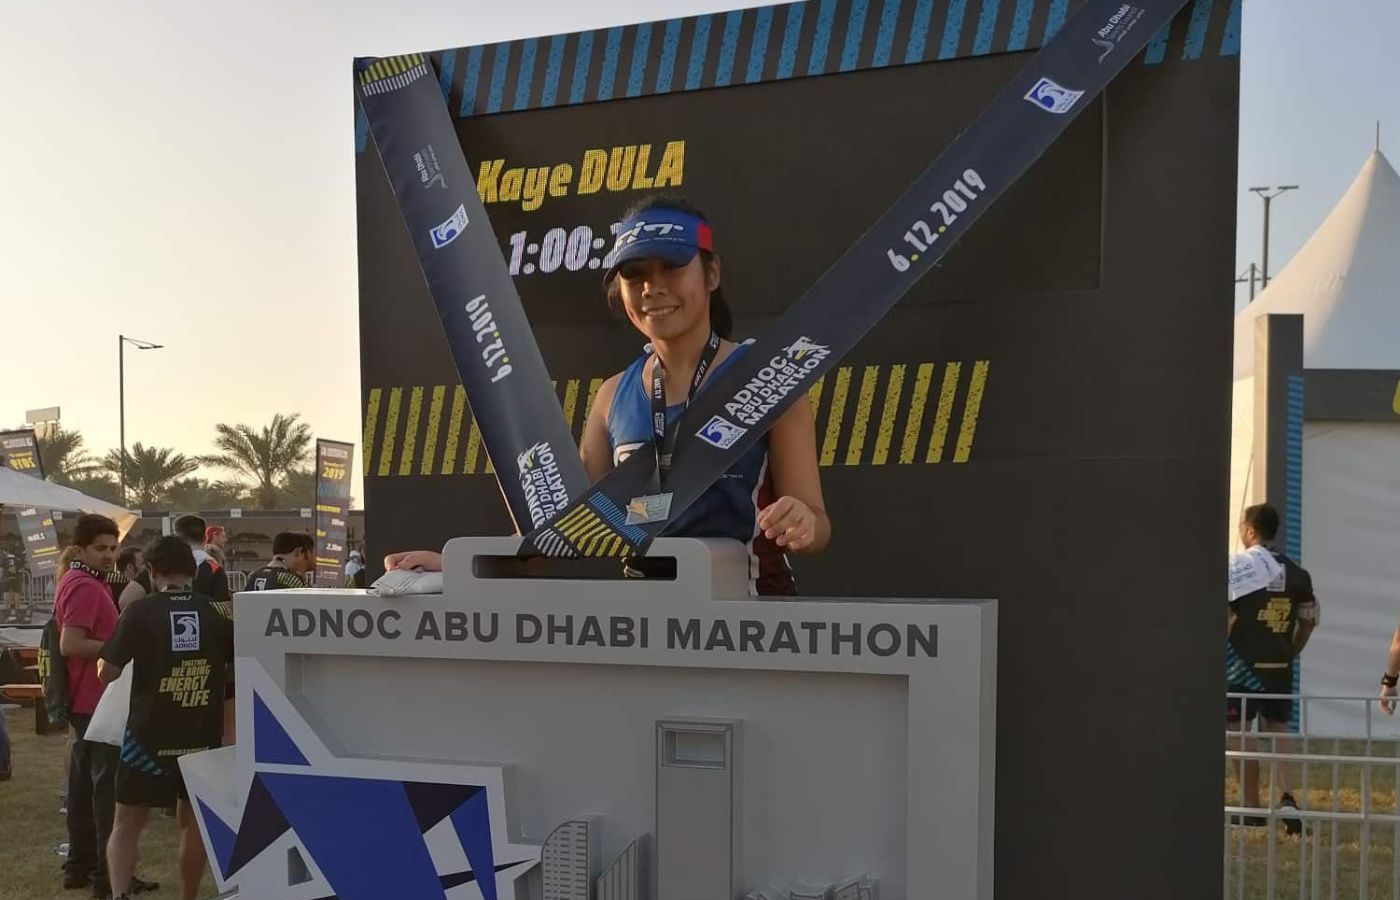 New branding expert in Abu Dhabi marathon